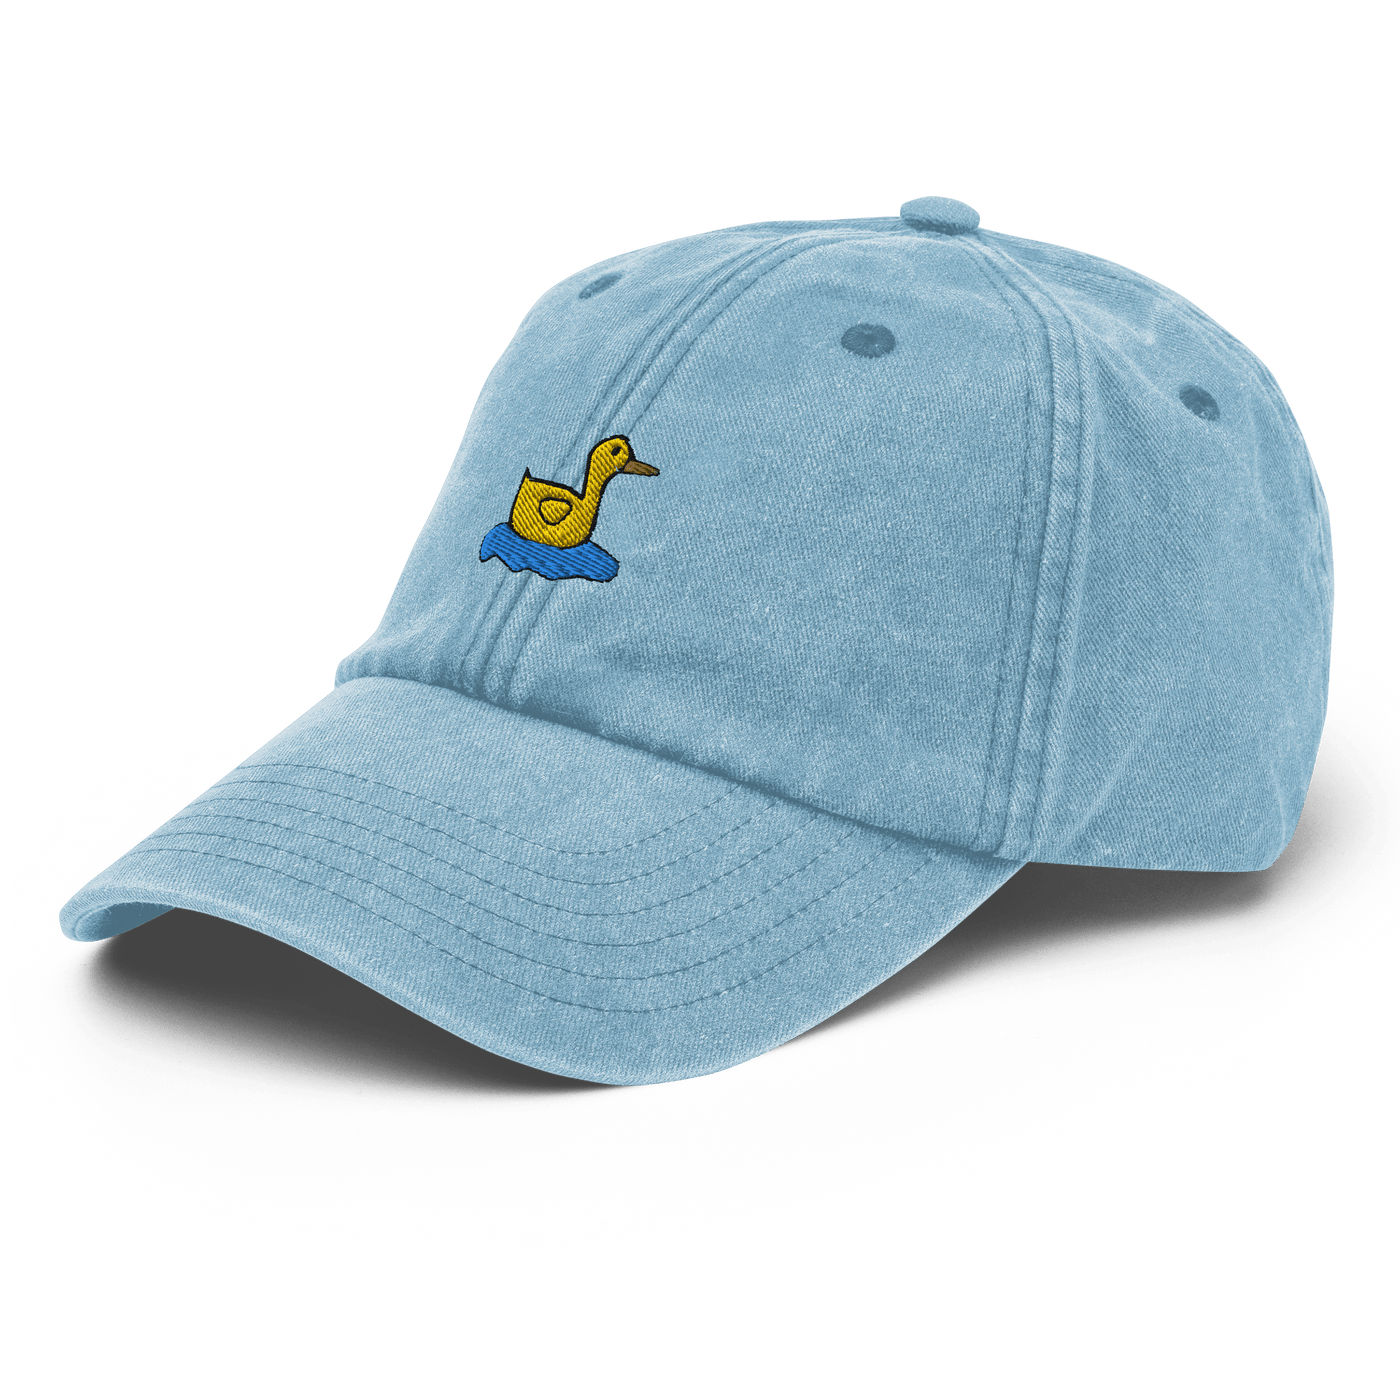 Lonely Duck Vintage Hat - Vintage Light Denim - - Just Another Cap Store